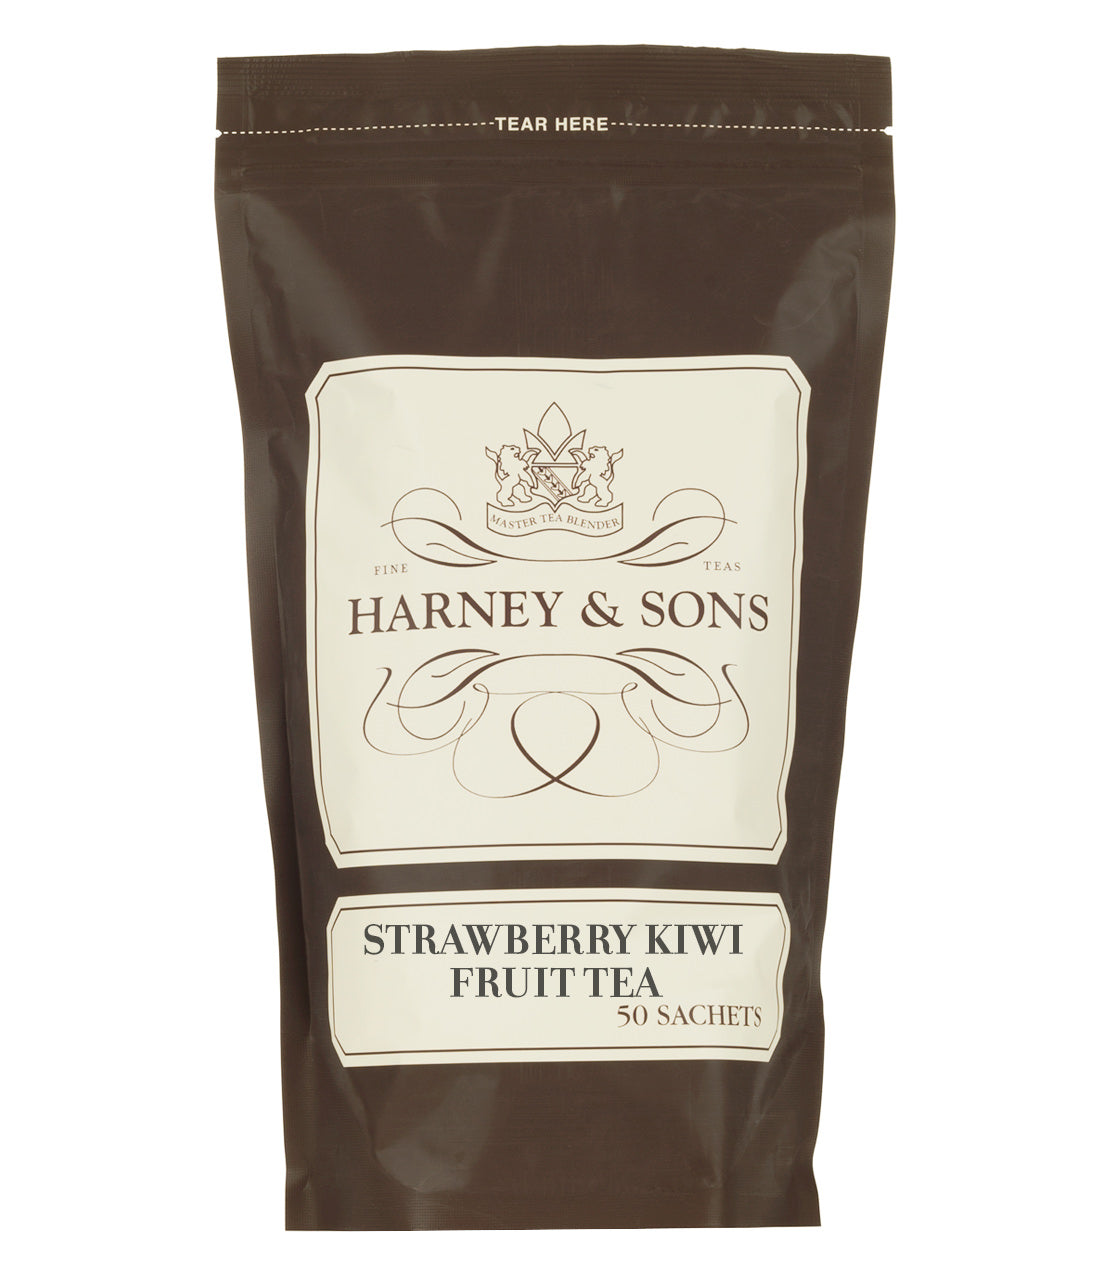 Strawberry Kiwi Fruit Tea - Sachets Bag of 50 Sachets - Harney & Sons Fine Teas